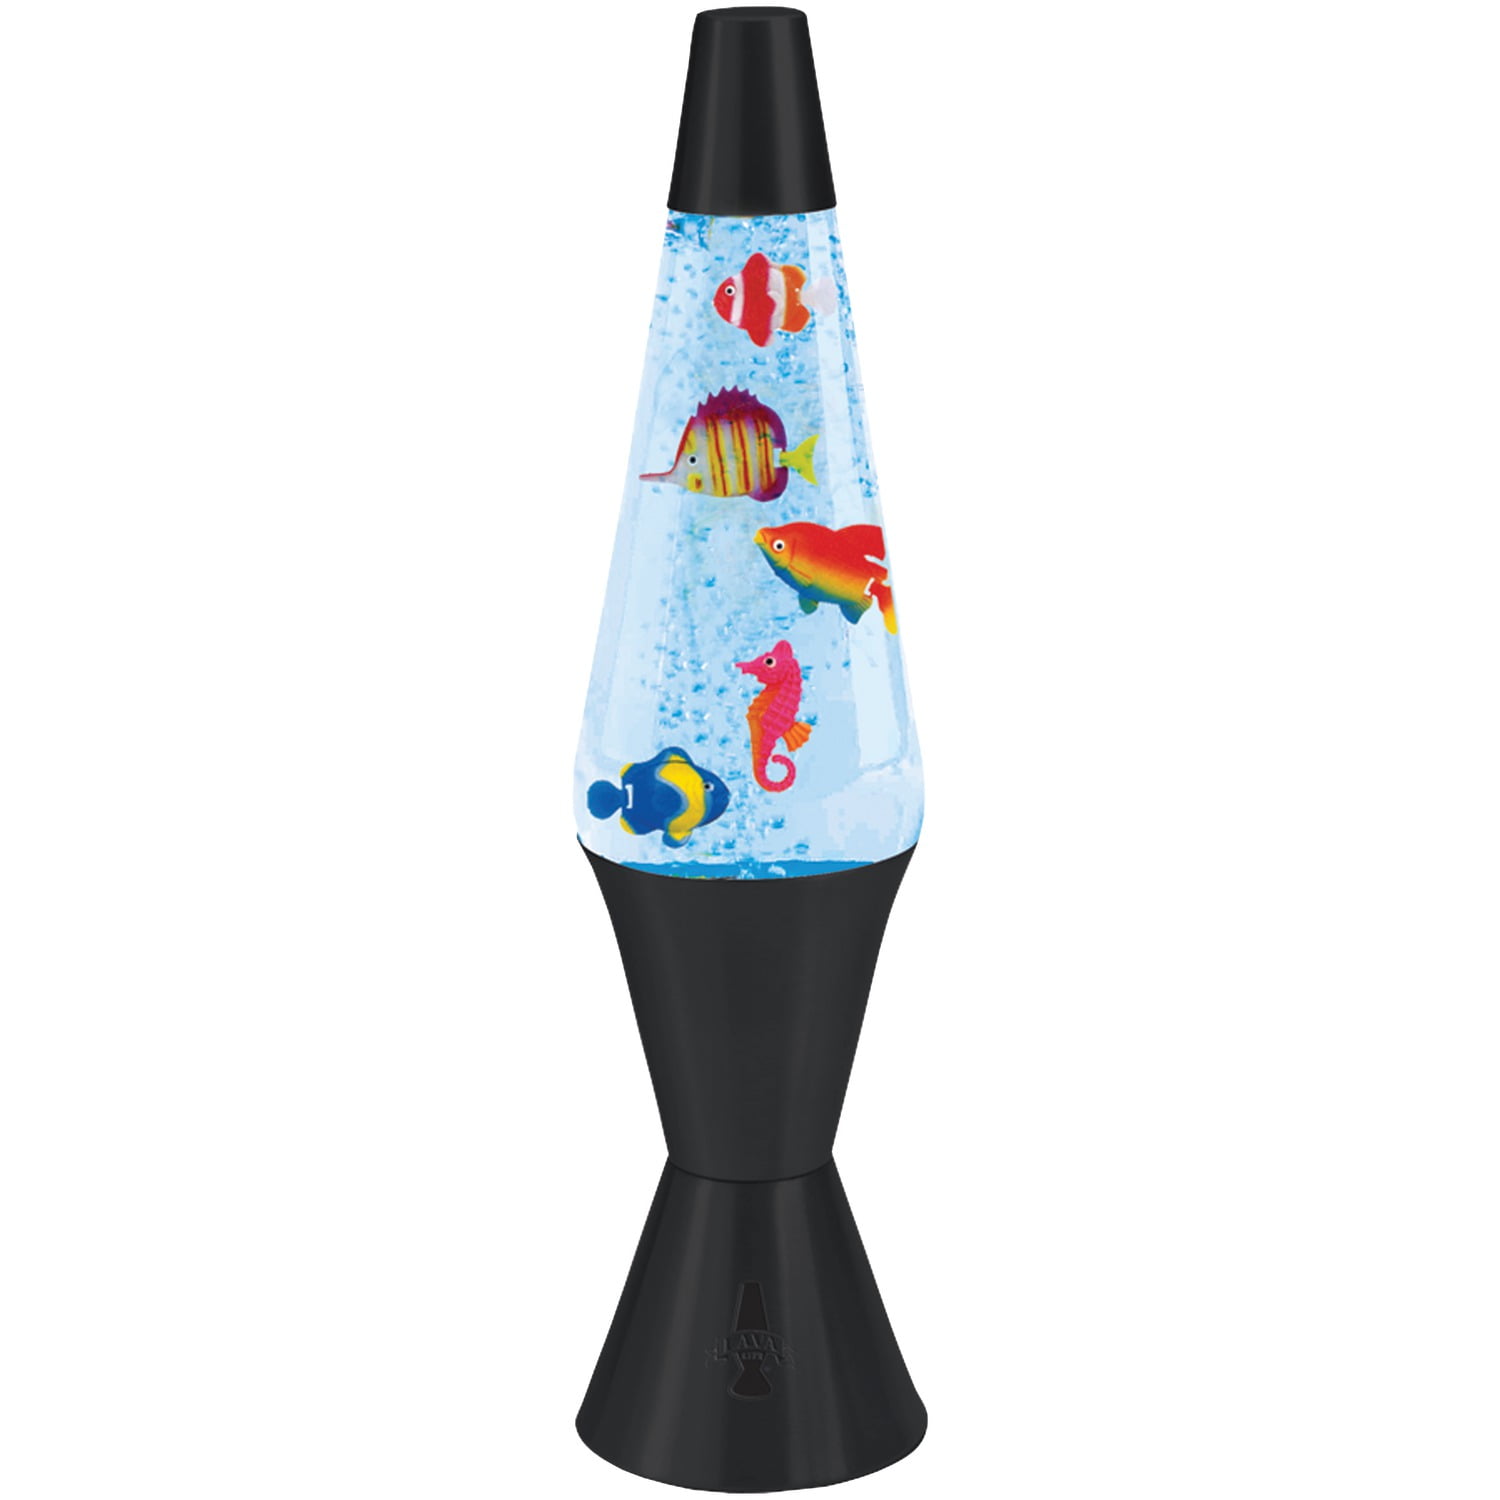 Bubble Lava Lamp LED Sensory Color Changing Aquarium Lamp Lava Night Light for Home Office Decor Perfect Gifts for Kids Great for Autism Sensory Toys Lava Lamp,14 inches Mini Fish Lava Lamp Blue